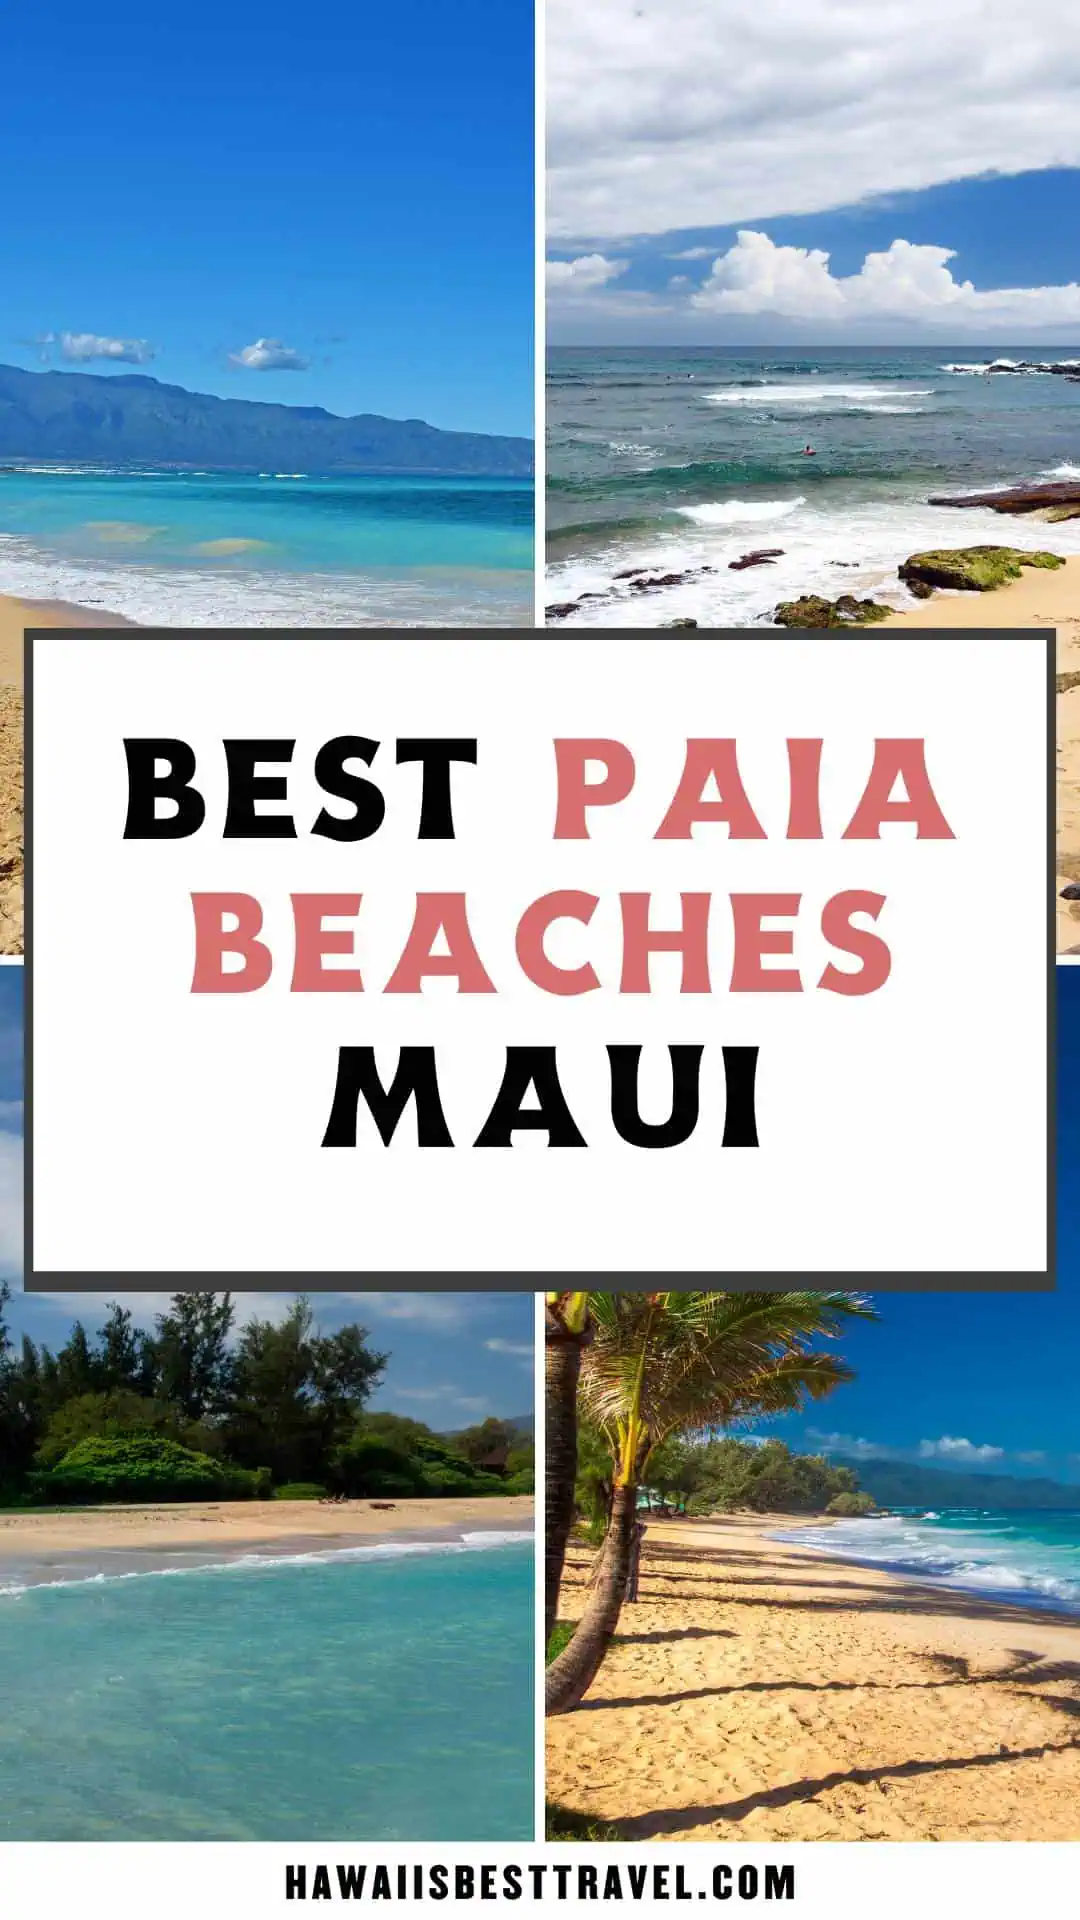 best paia beaches maui - pin